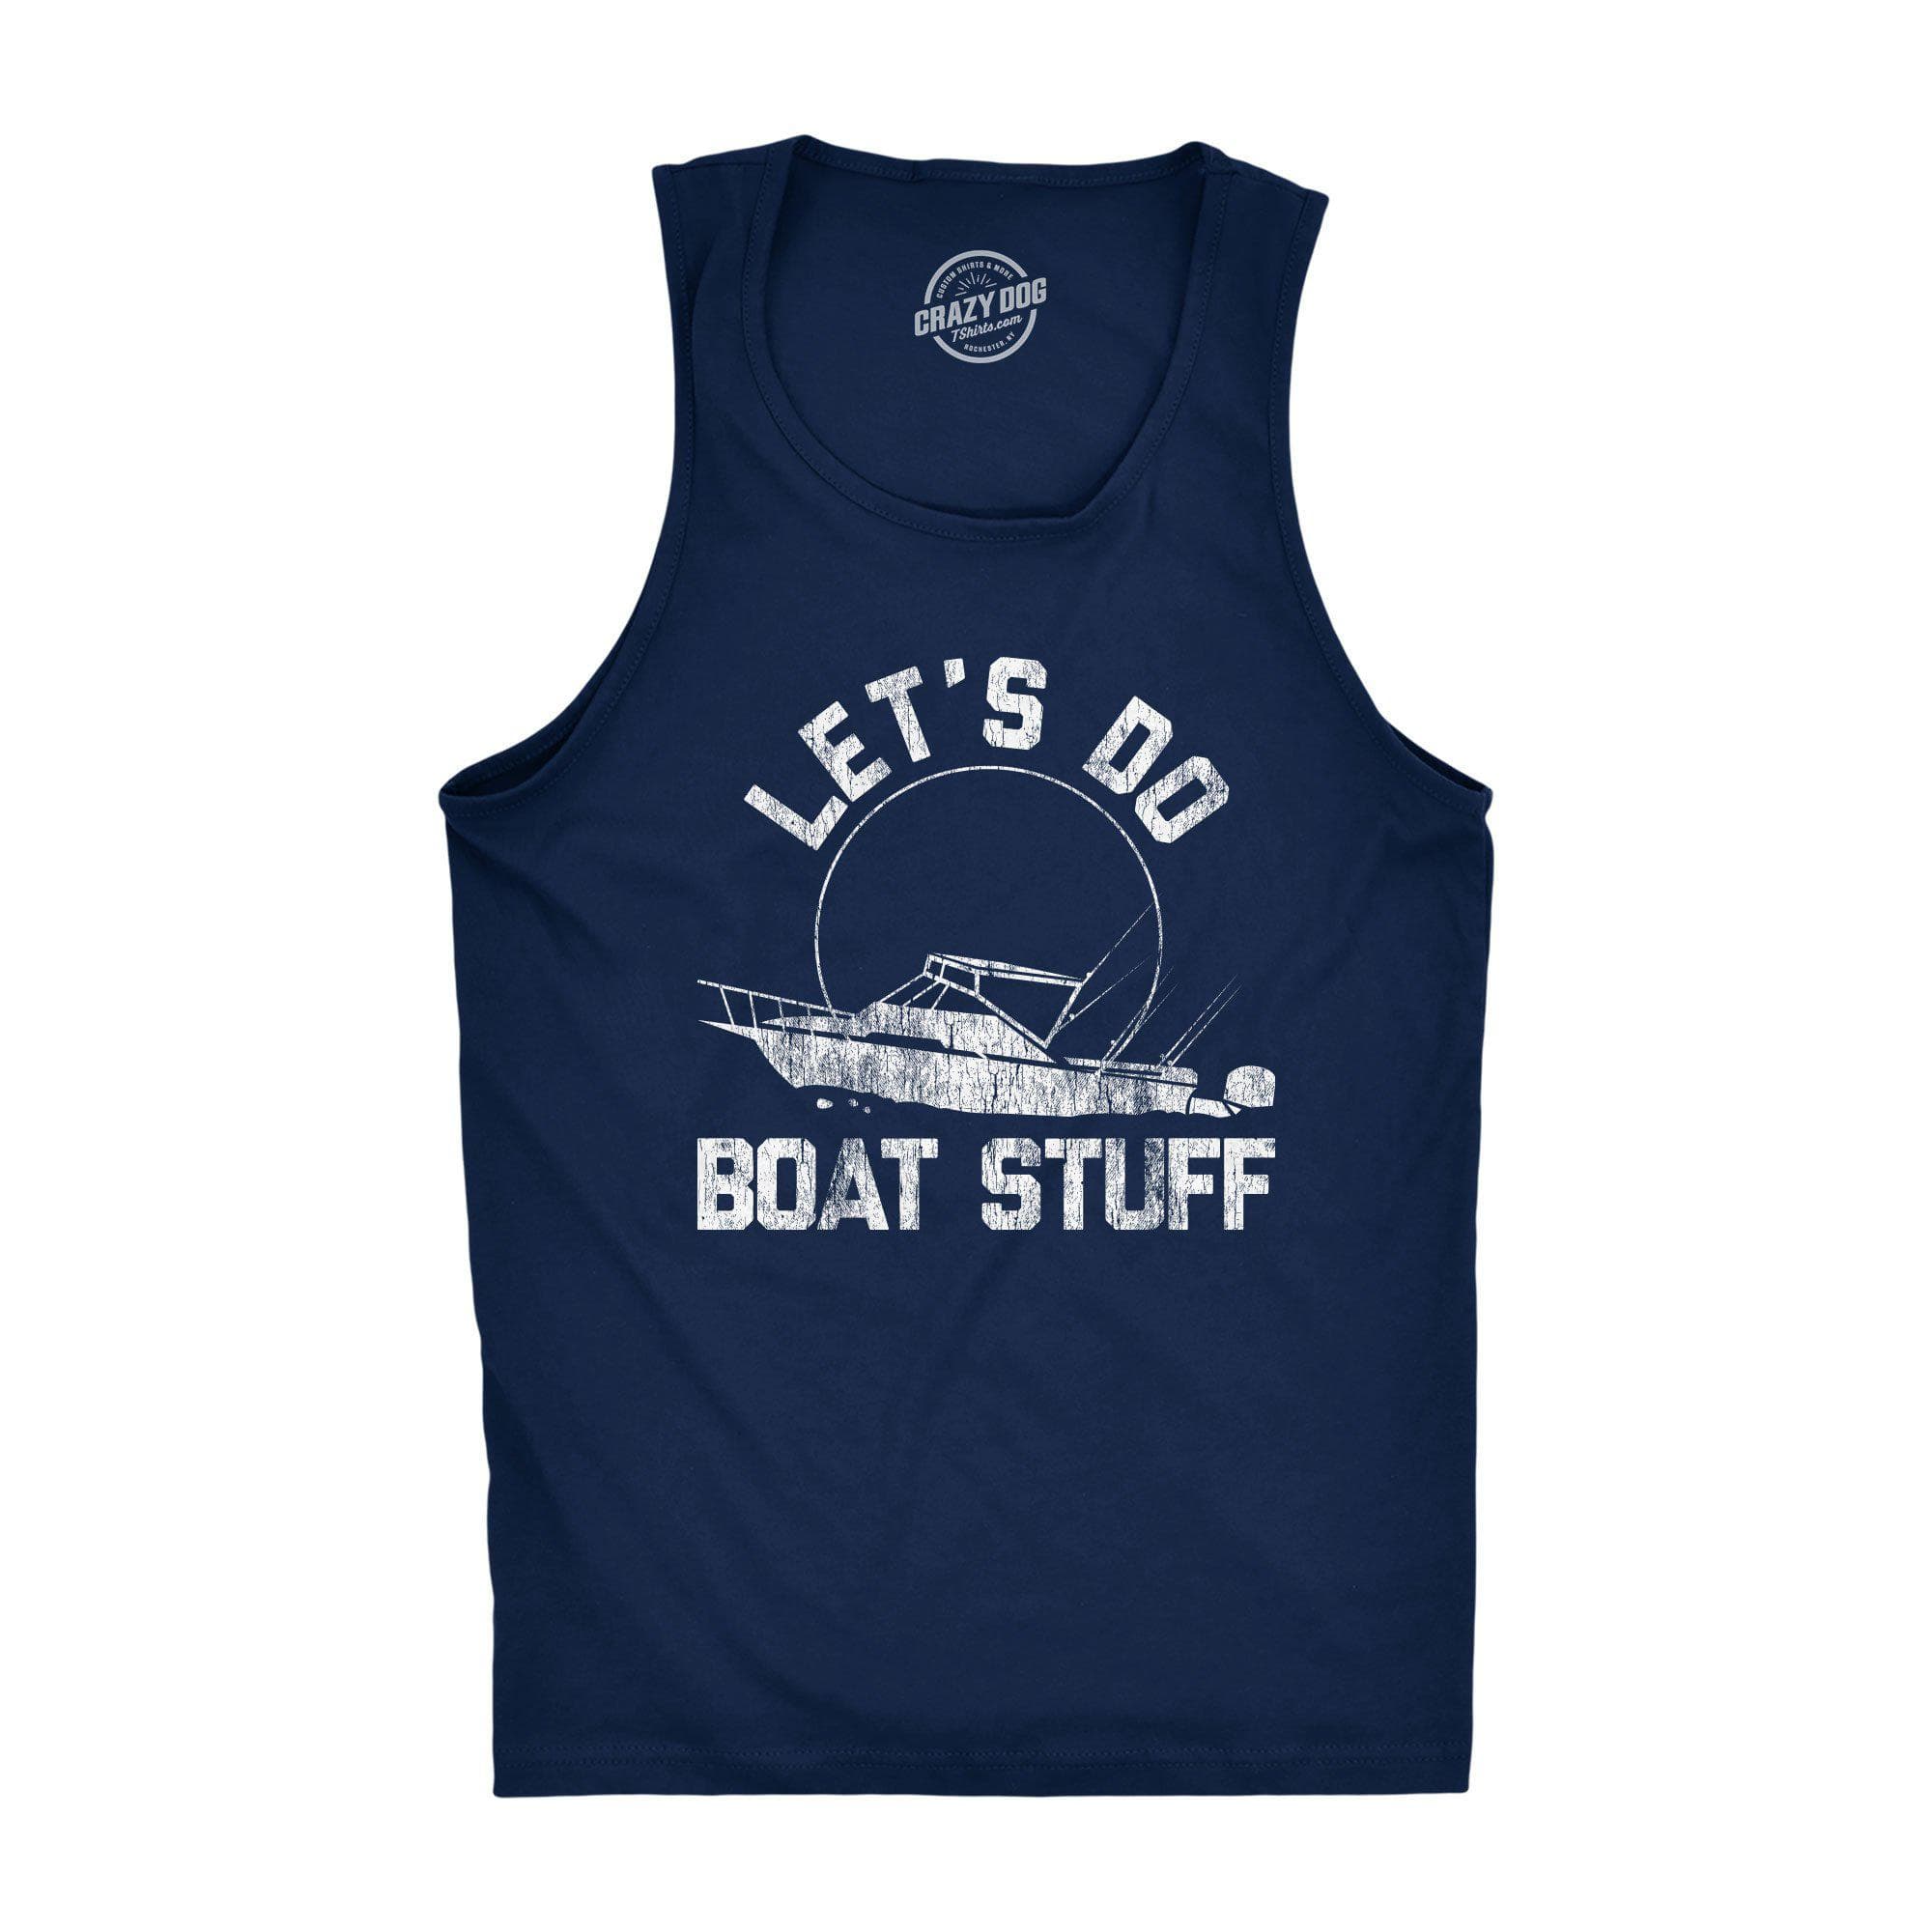 Let's Do Boat Stuff Men's Tank Top - Crazy Dog T-Shirts